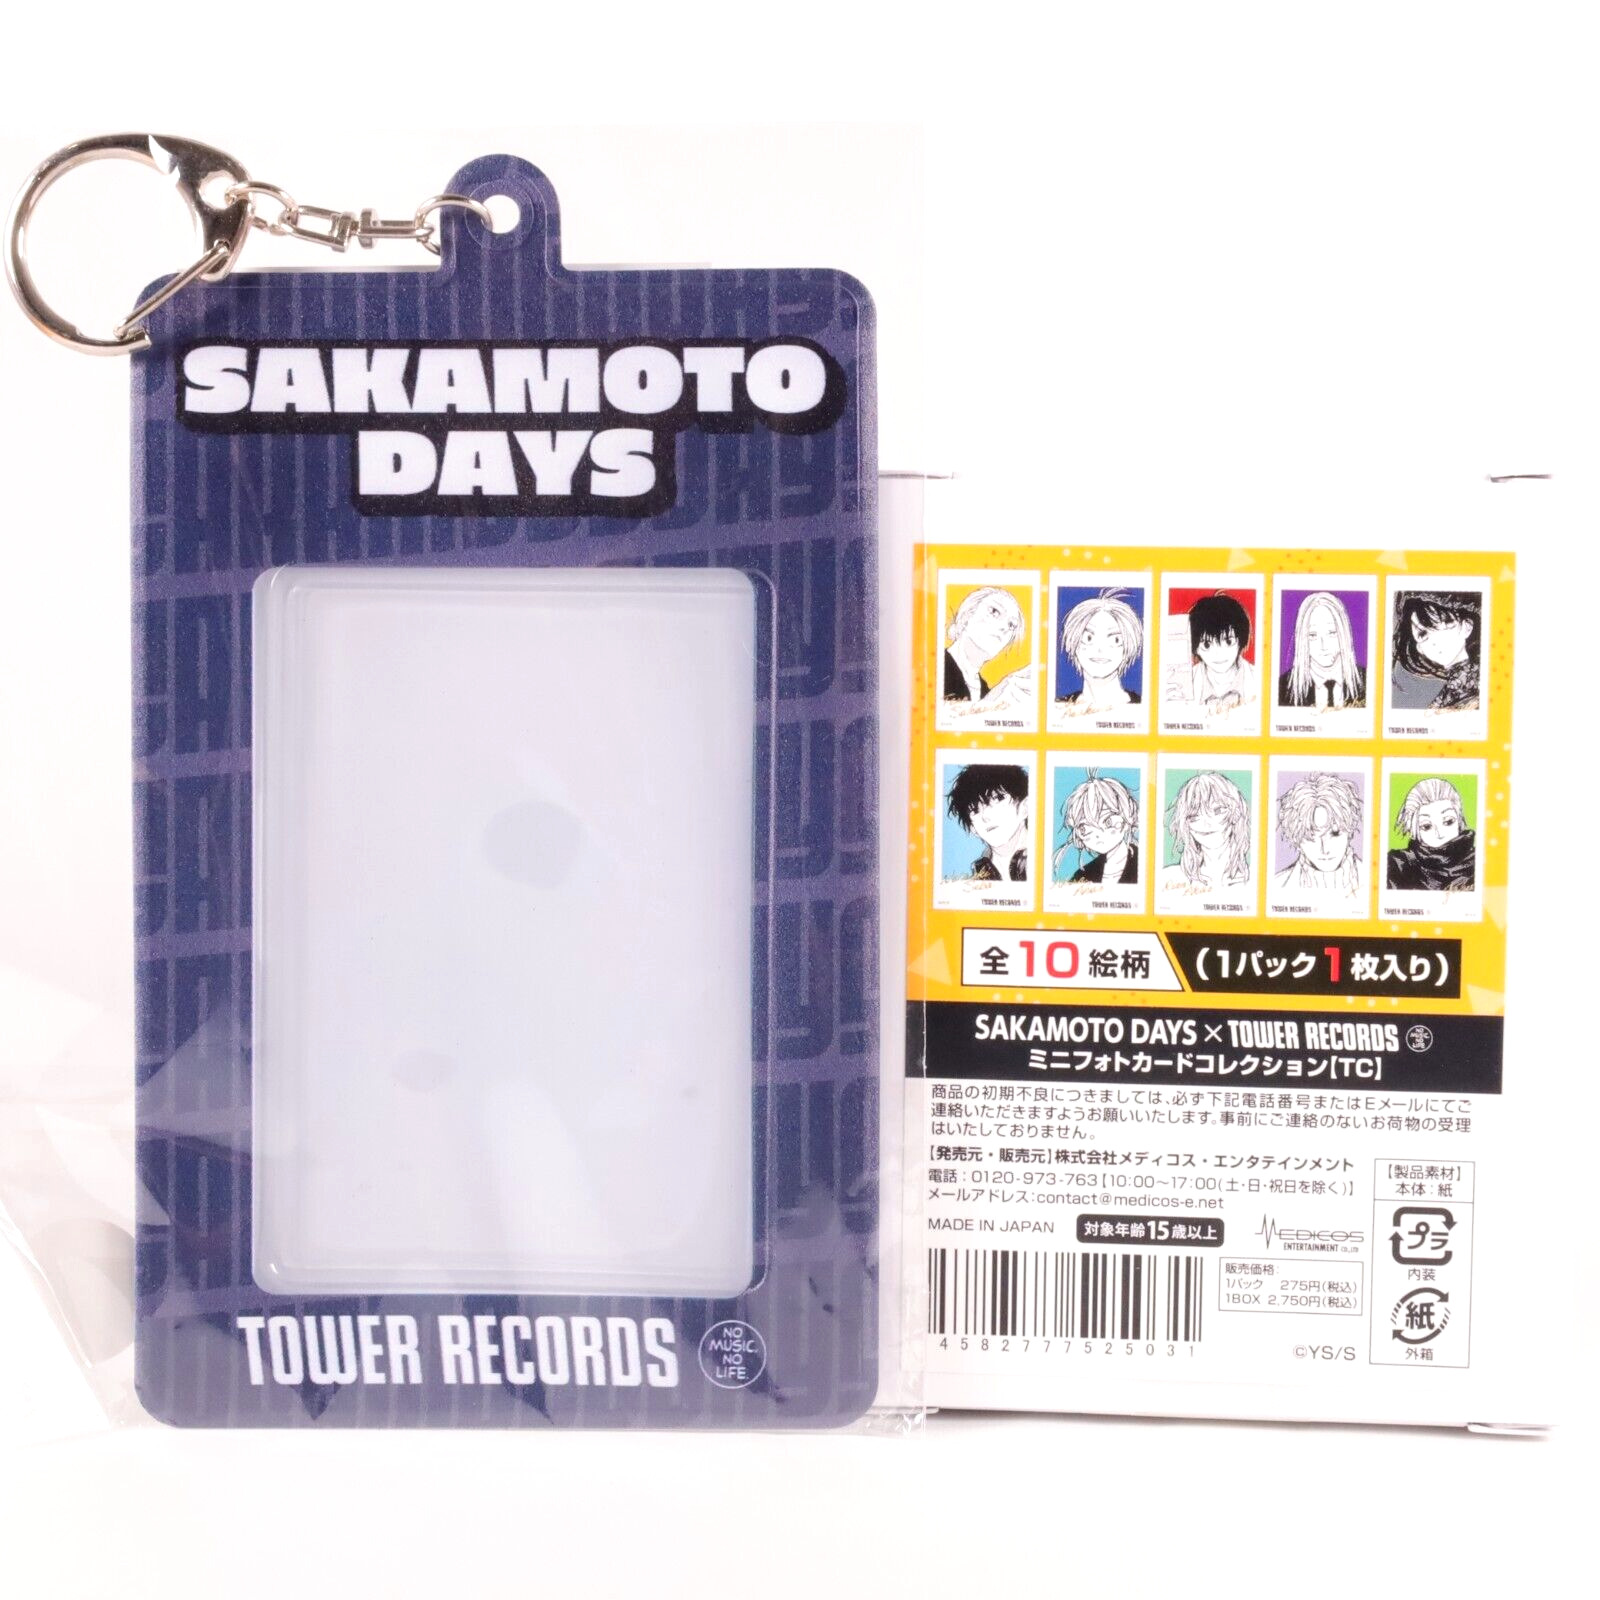 Sakamoto Days x Tower Records Café Photo Card Complete Box & Photo Card Holder